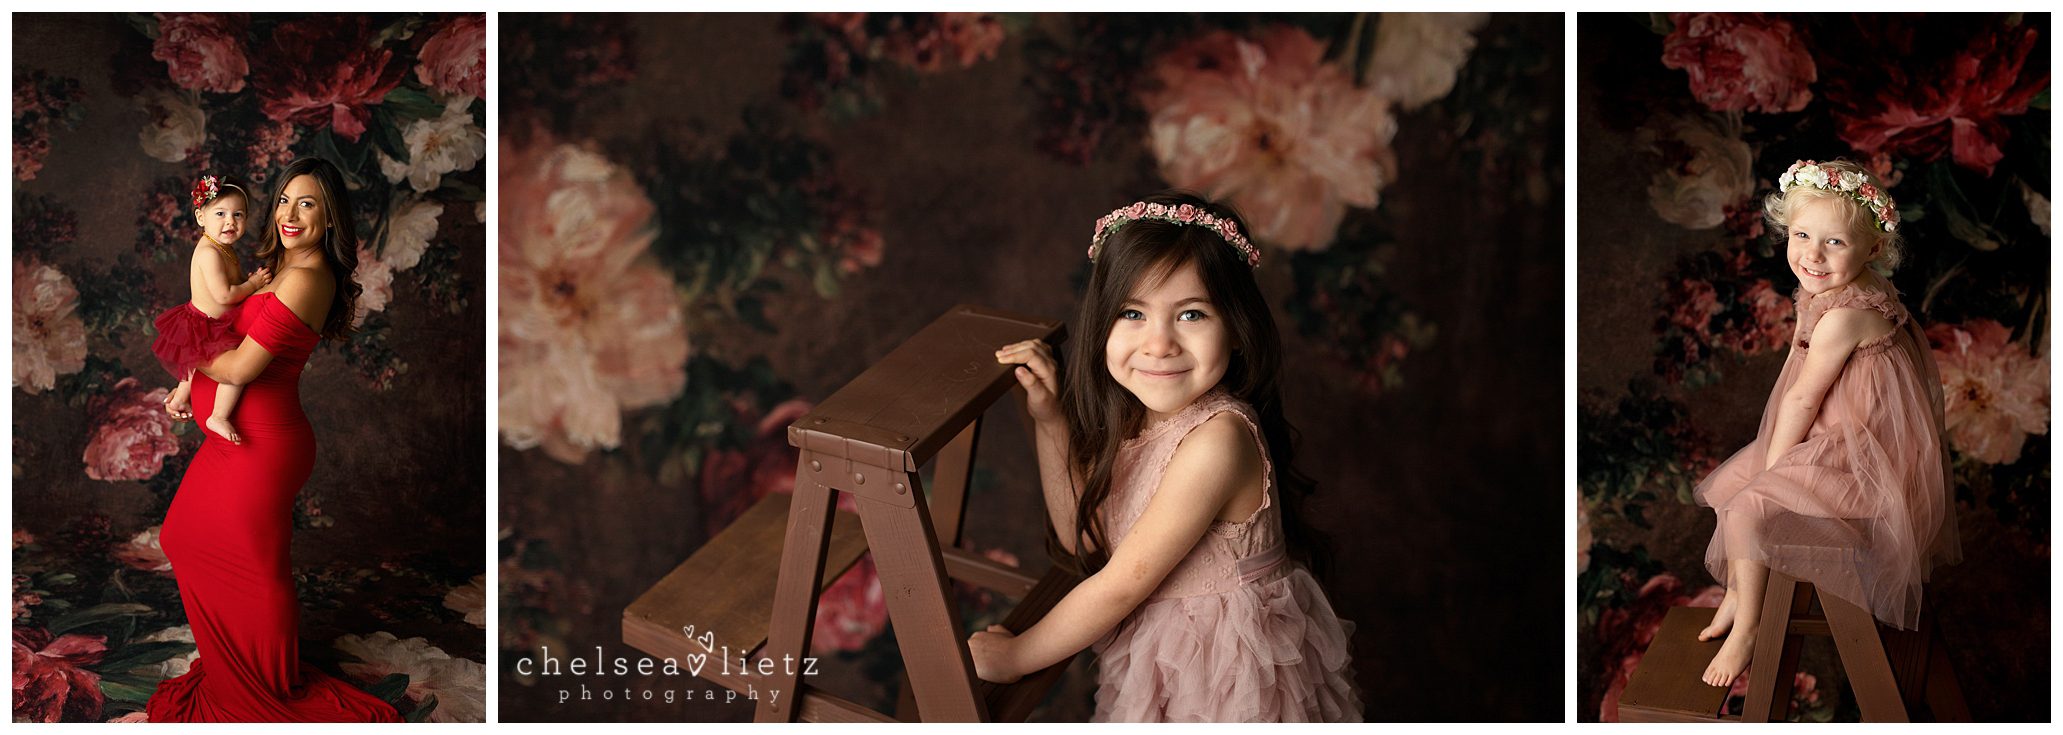 spring portrait mini sessions in San Antonio | Chelsea Lietz Photography